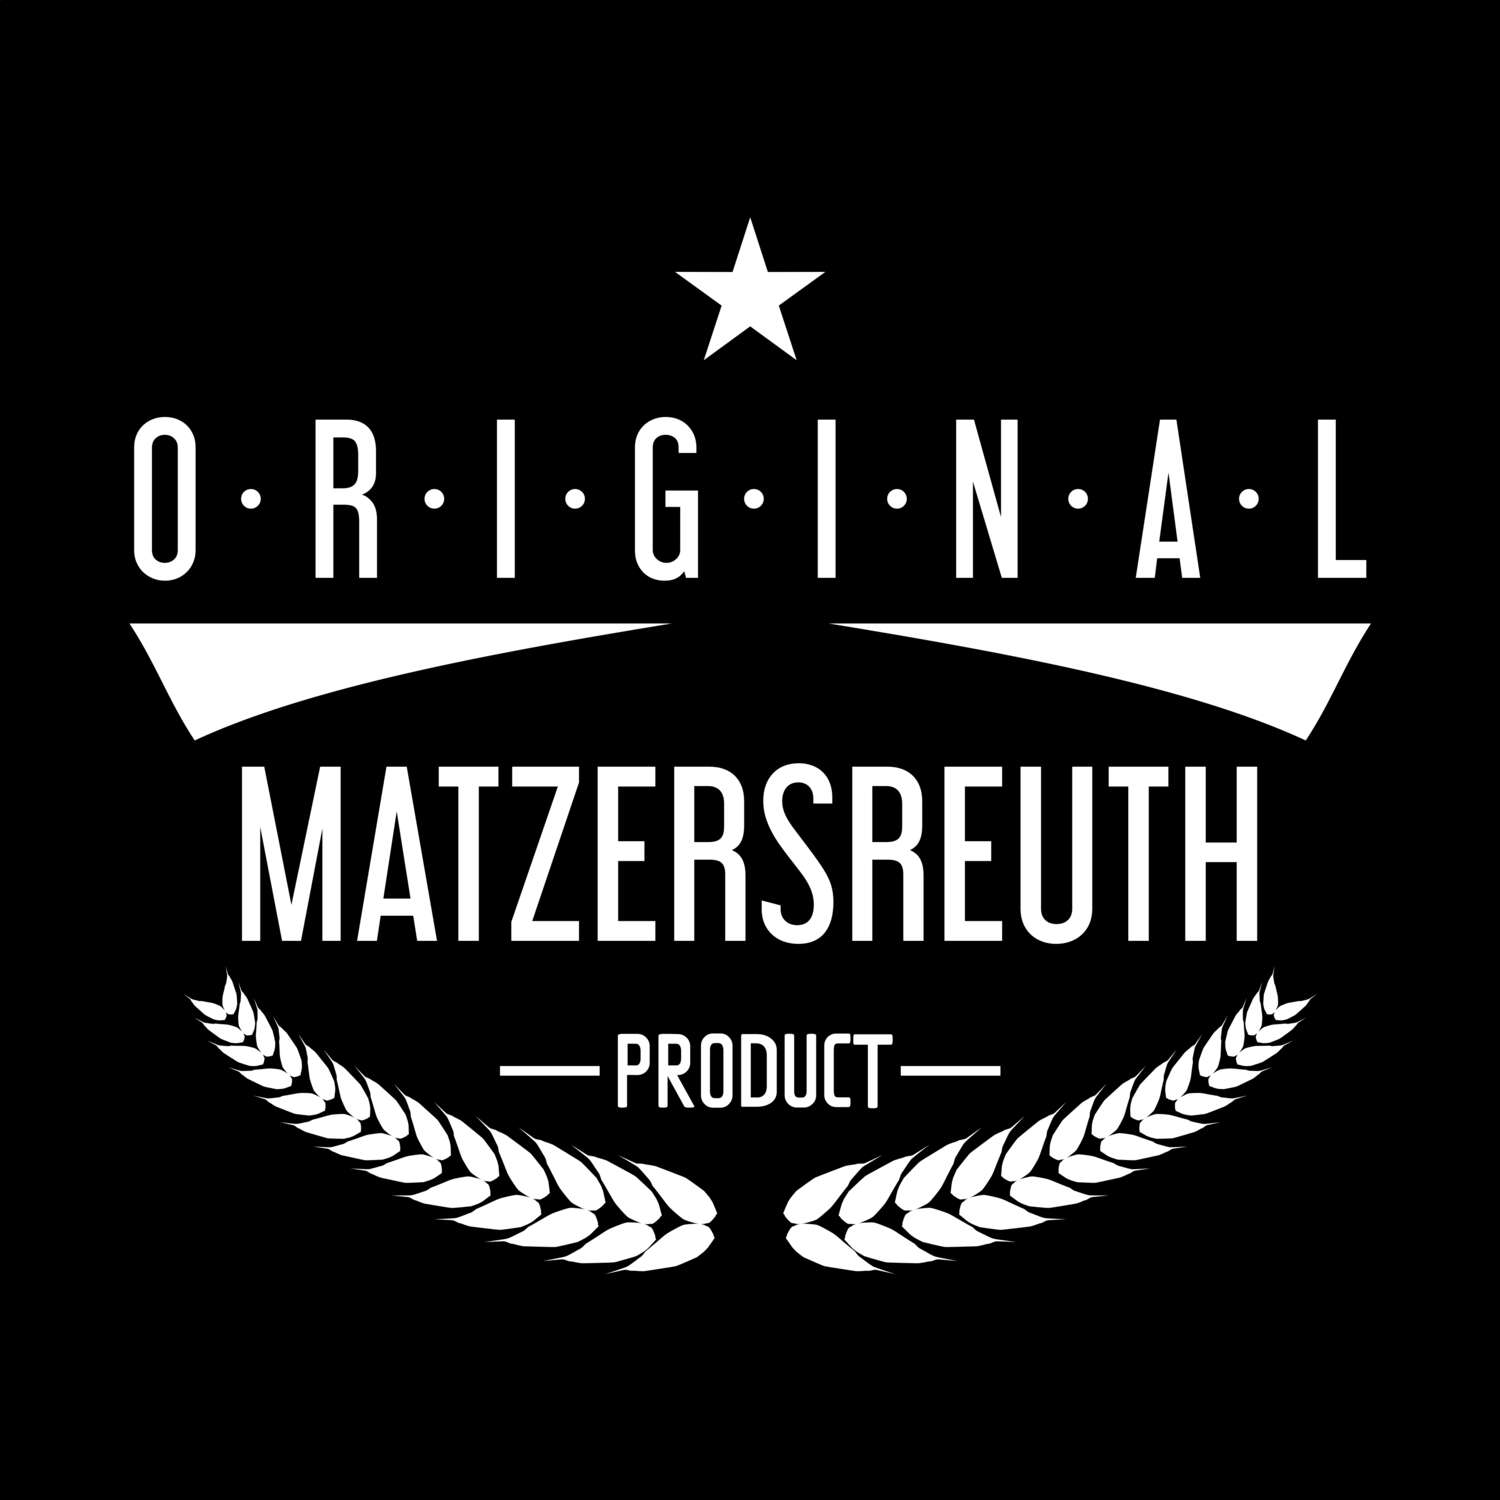 Matzersreuth T-Shirt »Original Product«